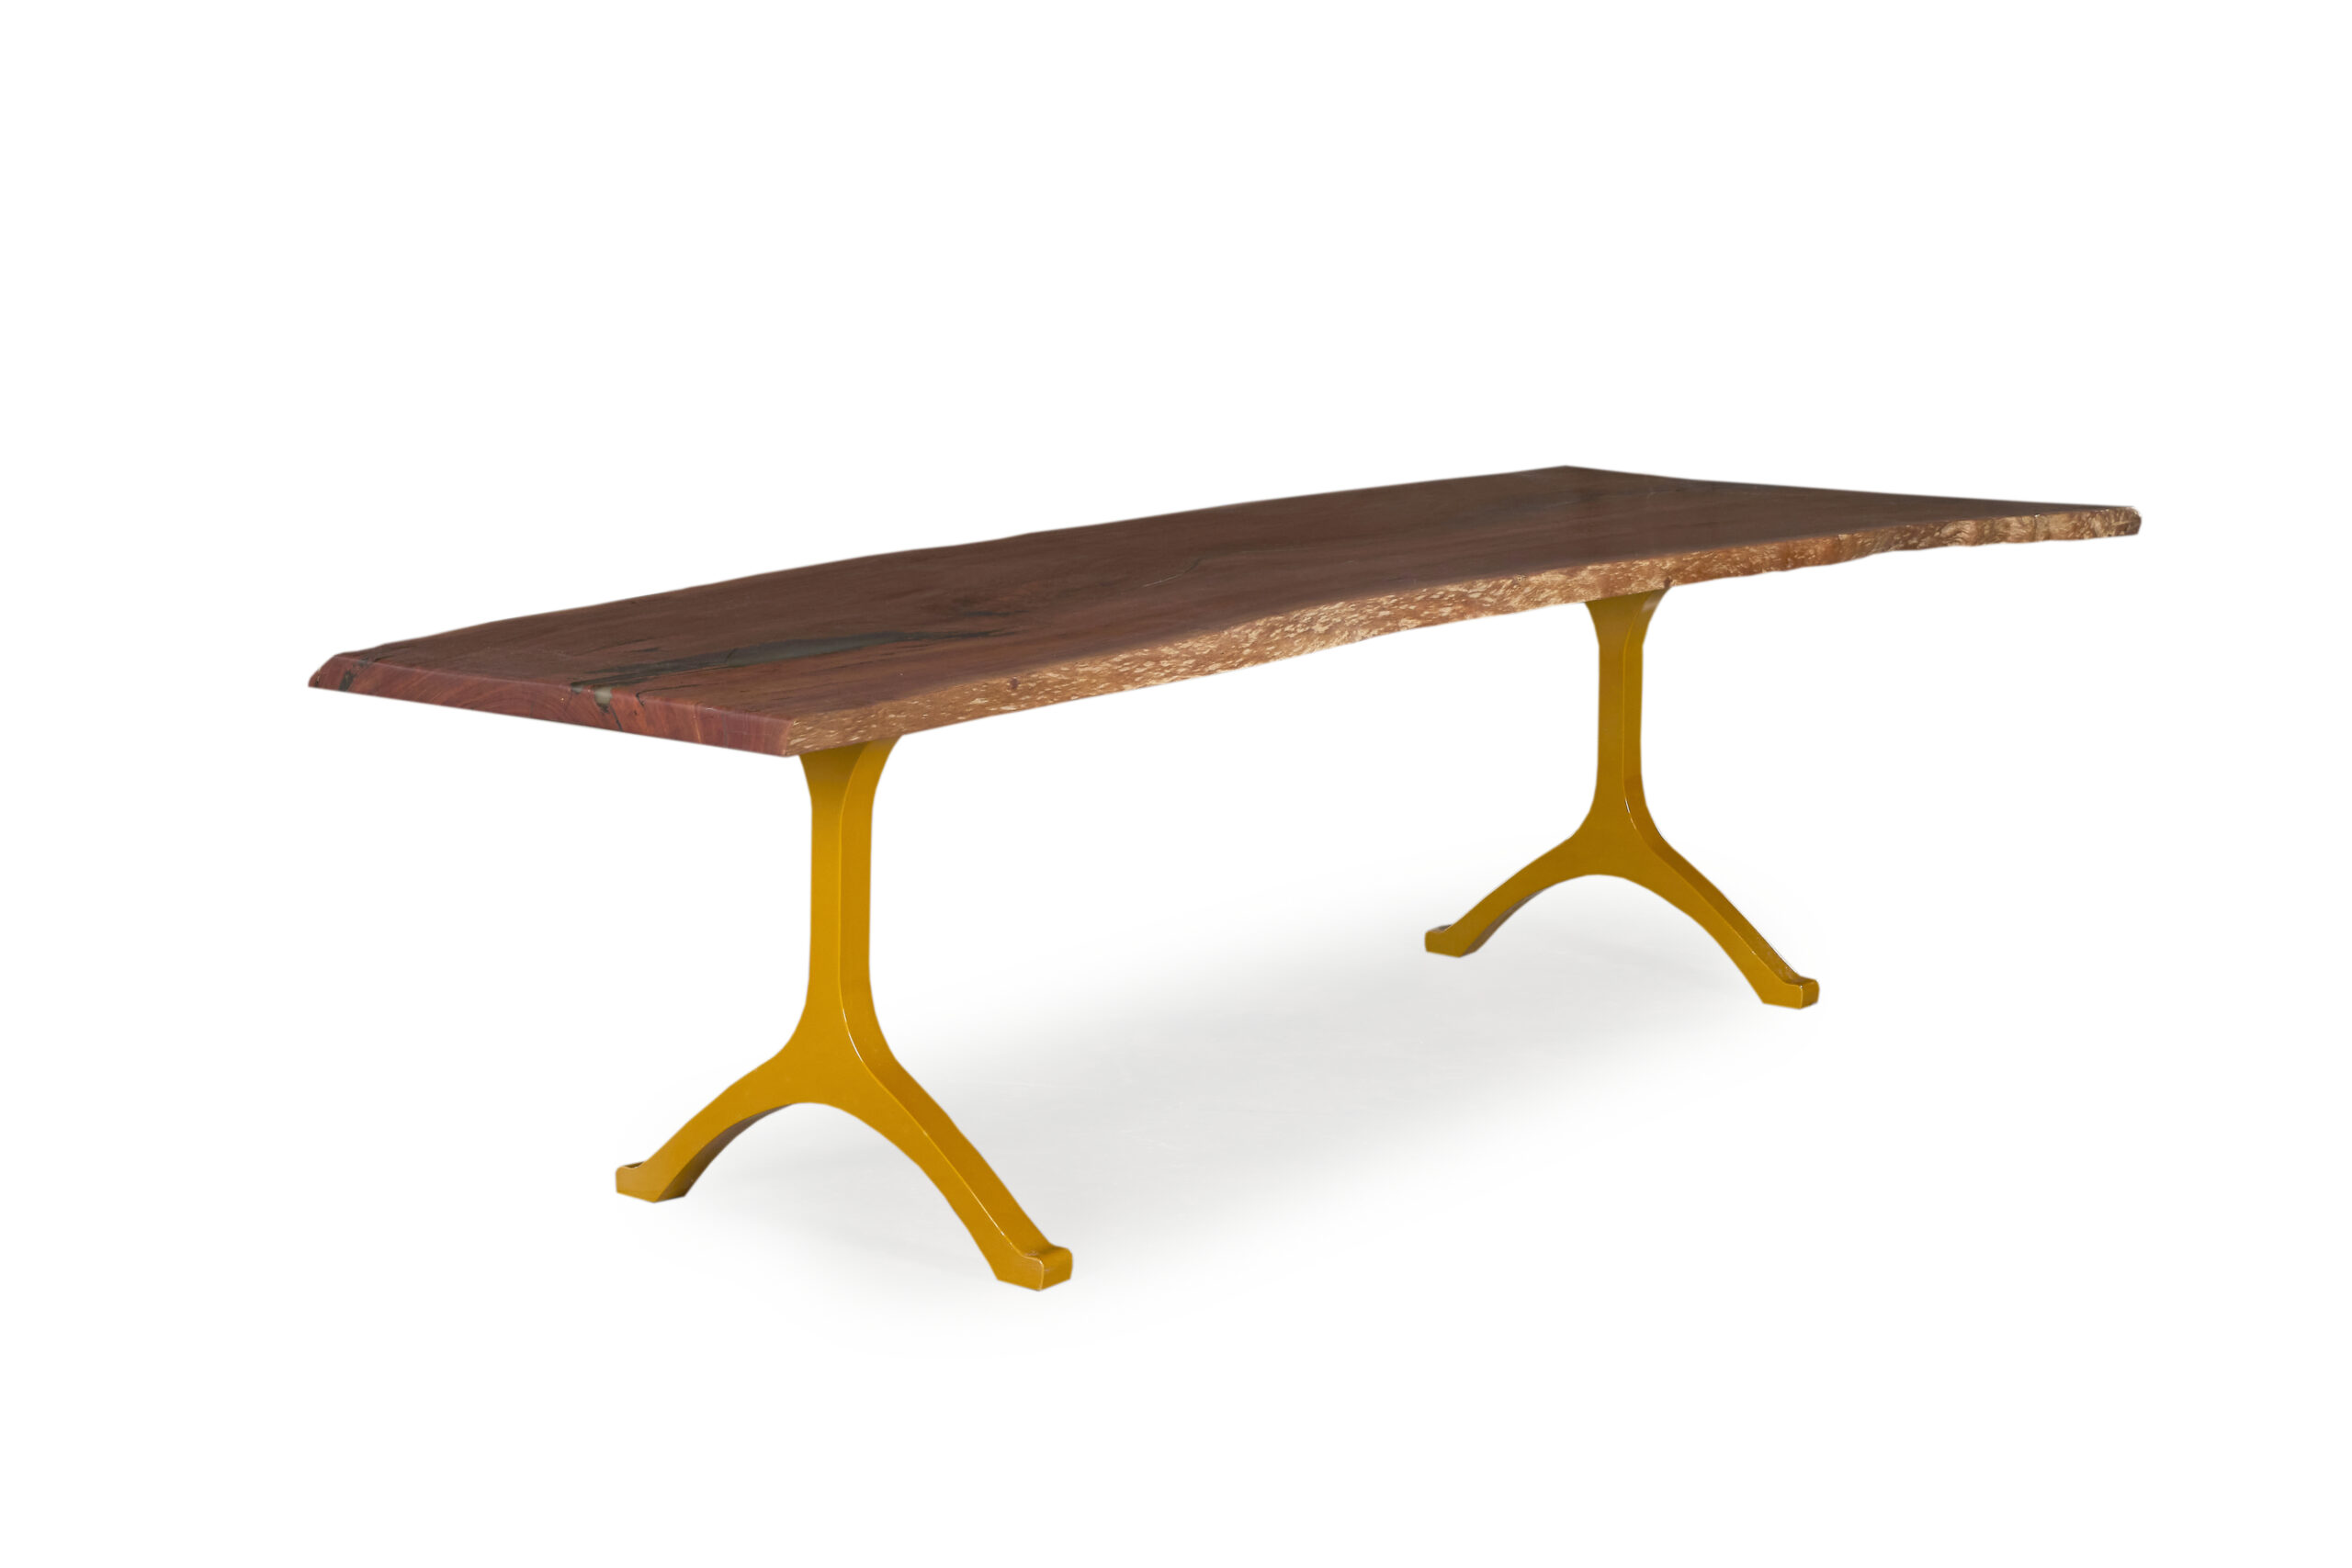 Mosman Dining Table - Redgum timber, natural edge design, Wishbone Leg Gold base